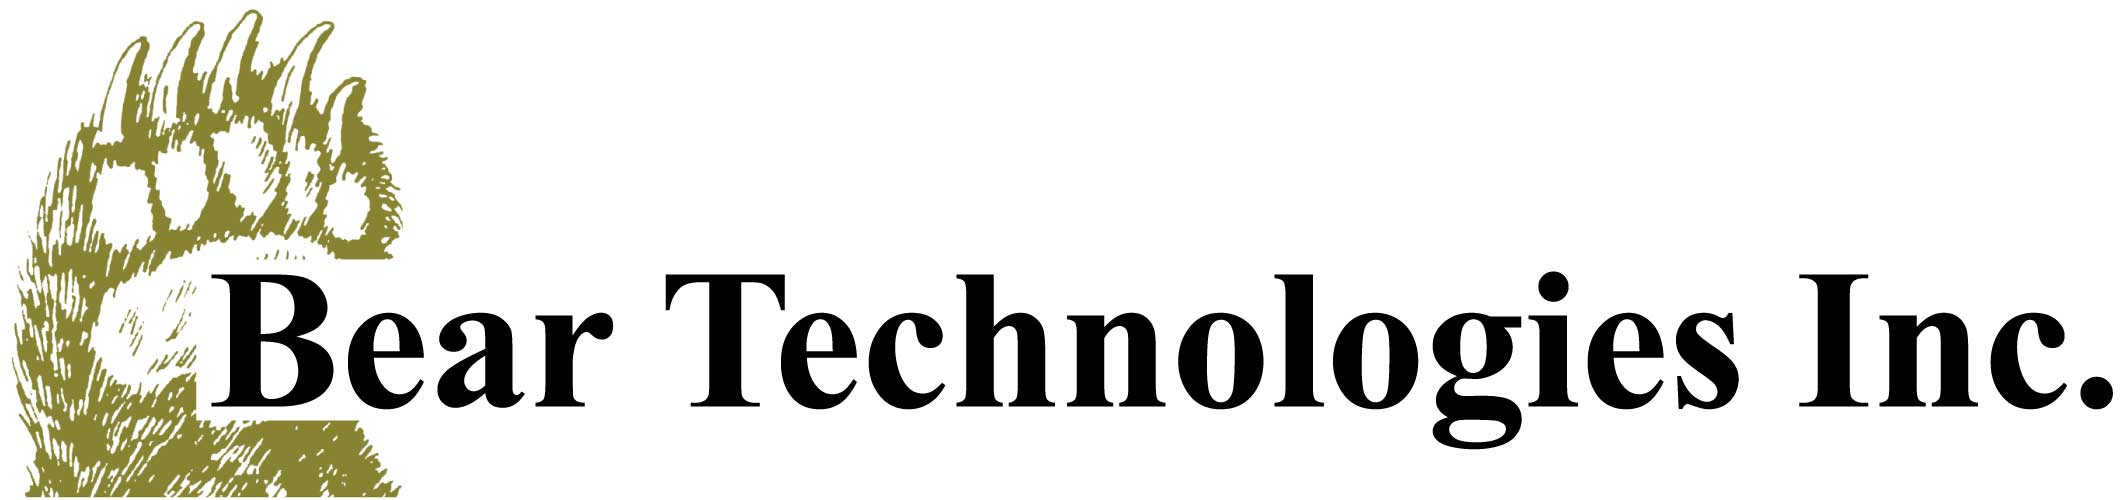 Bear Technologies Inc logo